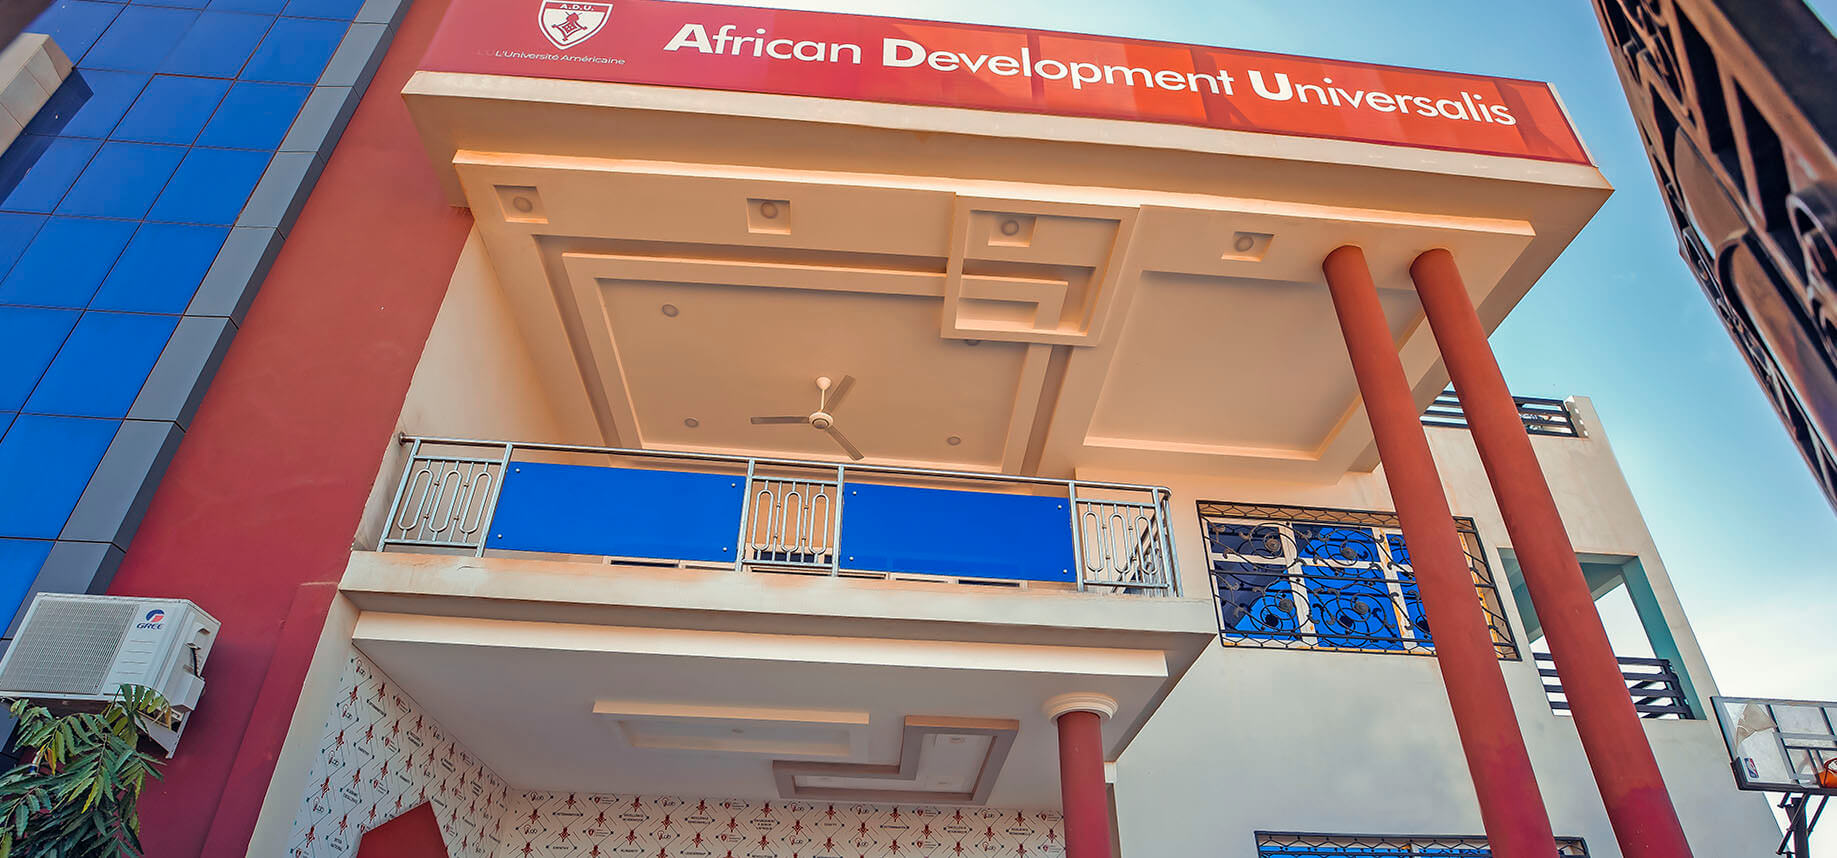 The African Development University